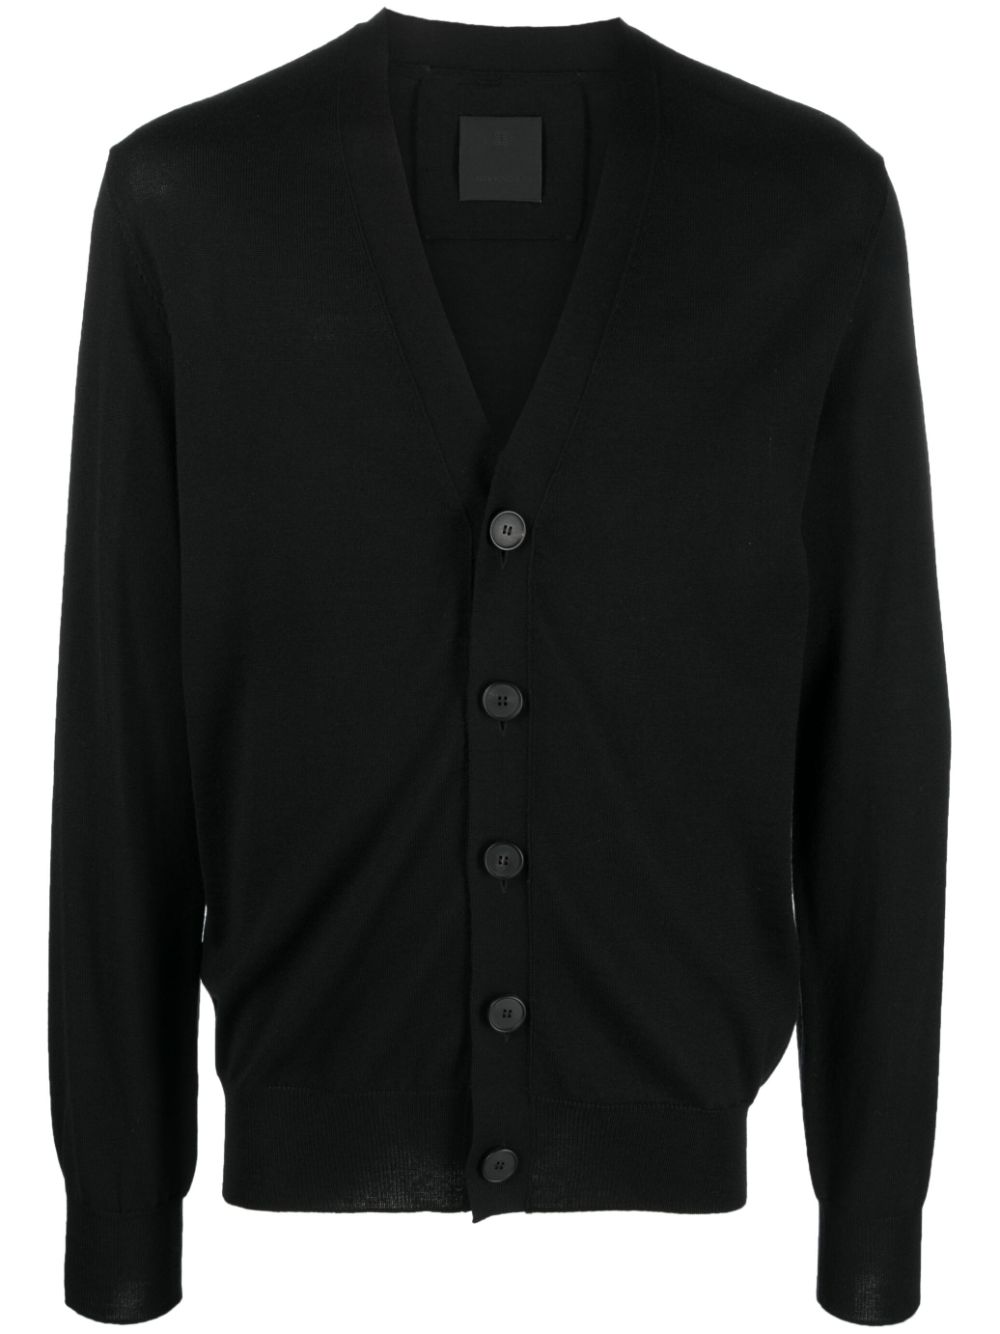 Givenchy Men's Black Wool Intarsia-knit Cardigan